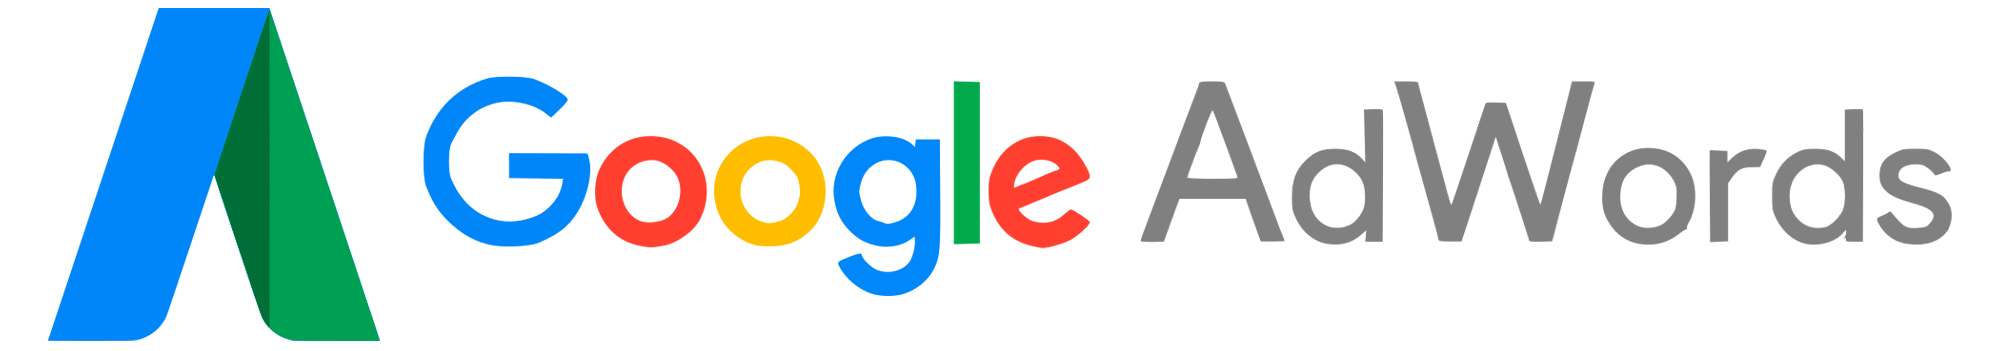 Logotip plataforma màrqueting digital Google Adwords.